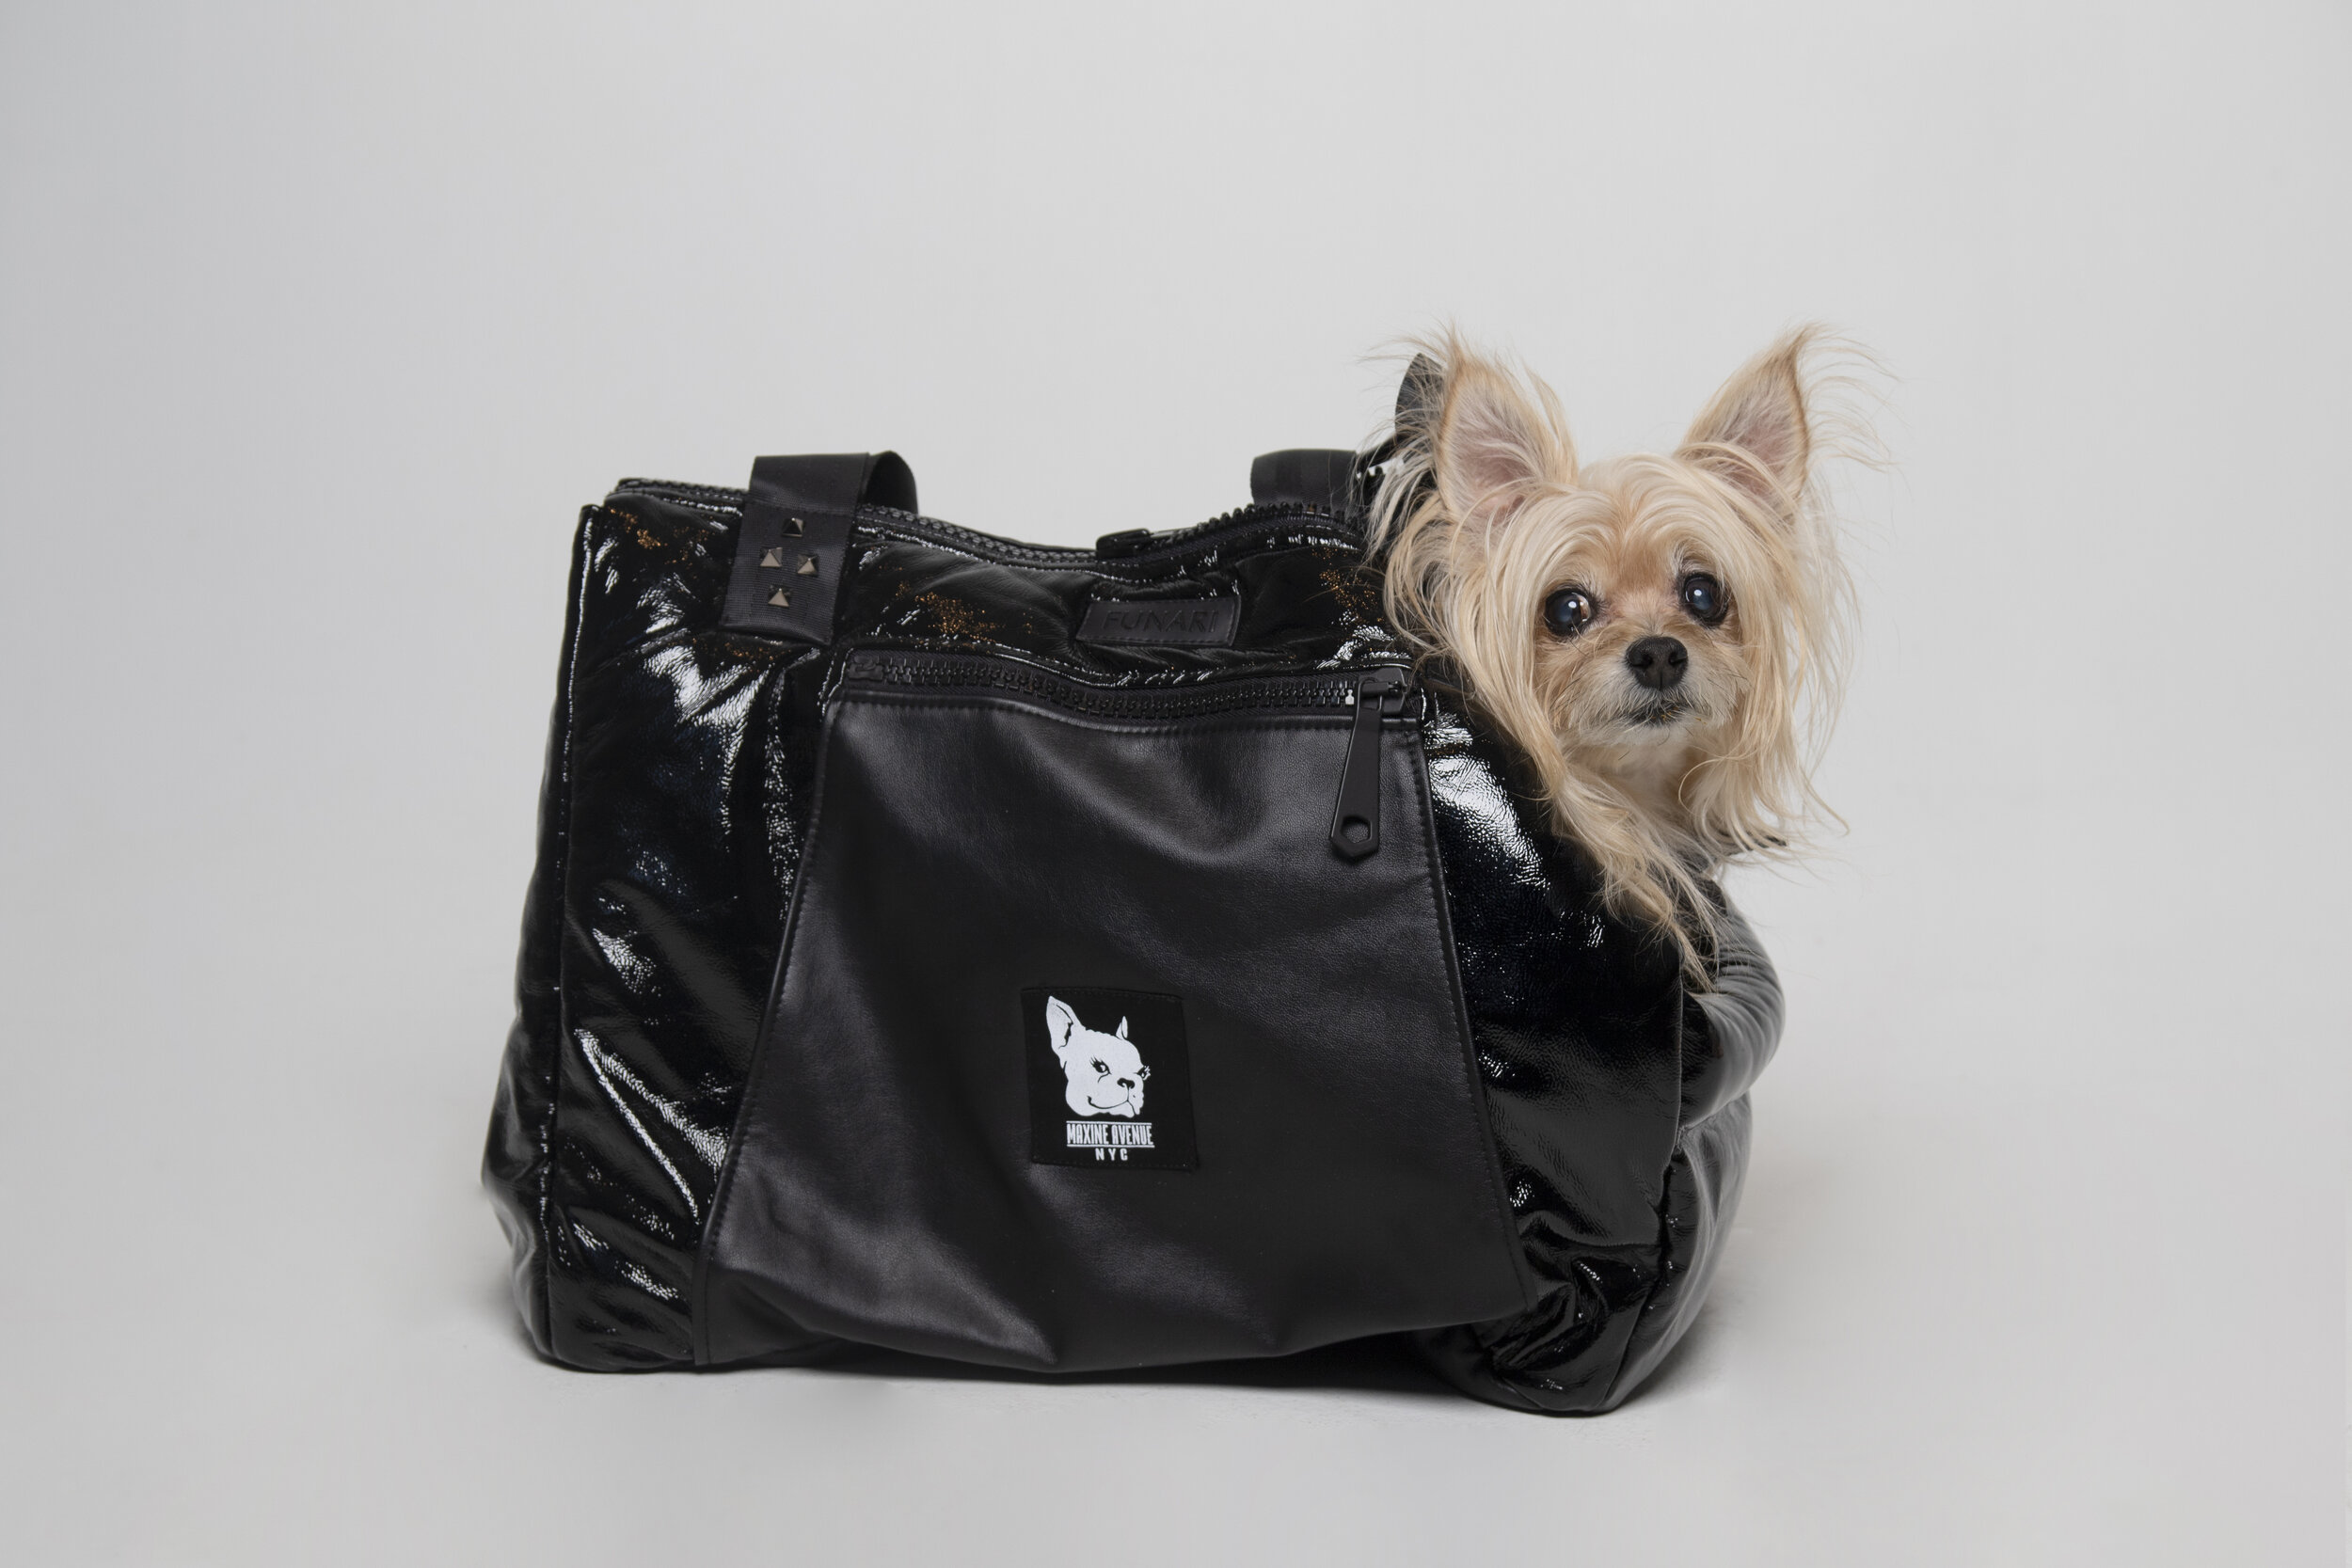 Petsfit Dog Carrier Bag, Portable Pet Carrier Tote India | Ubuy